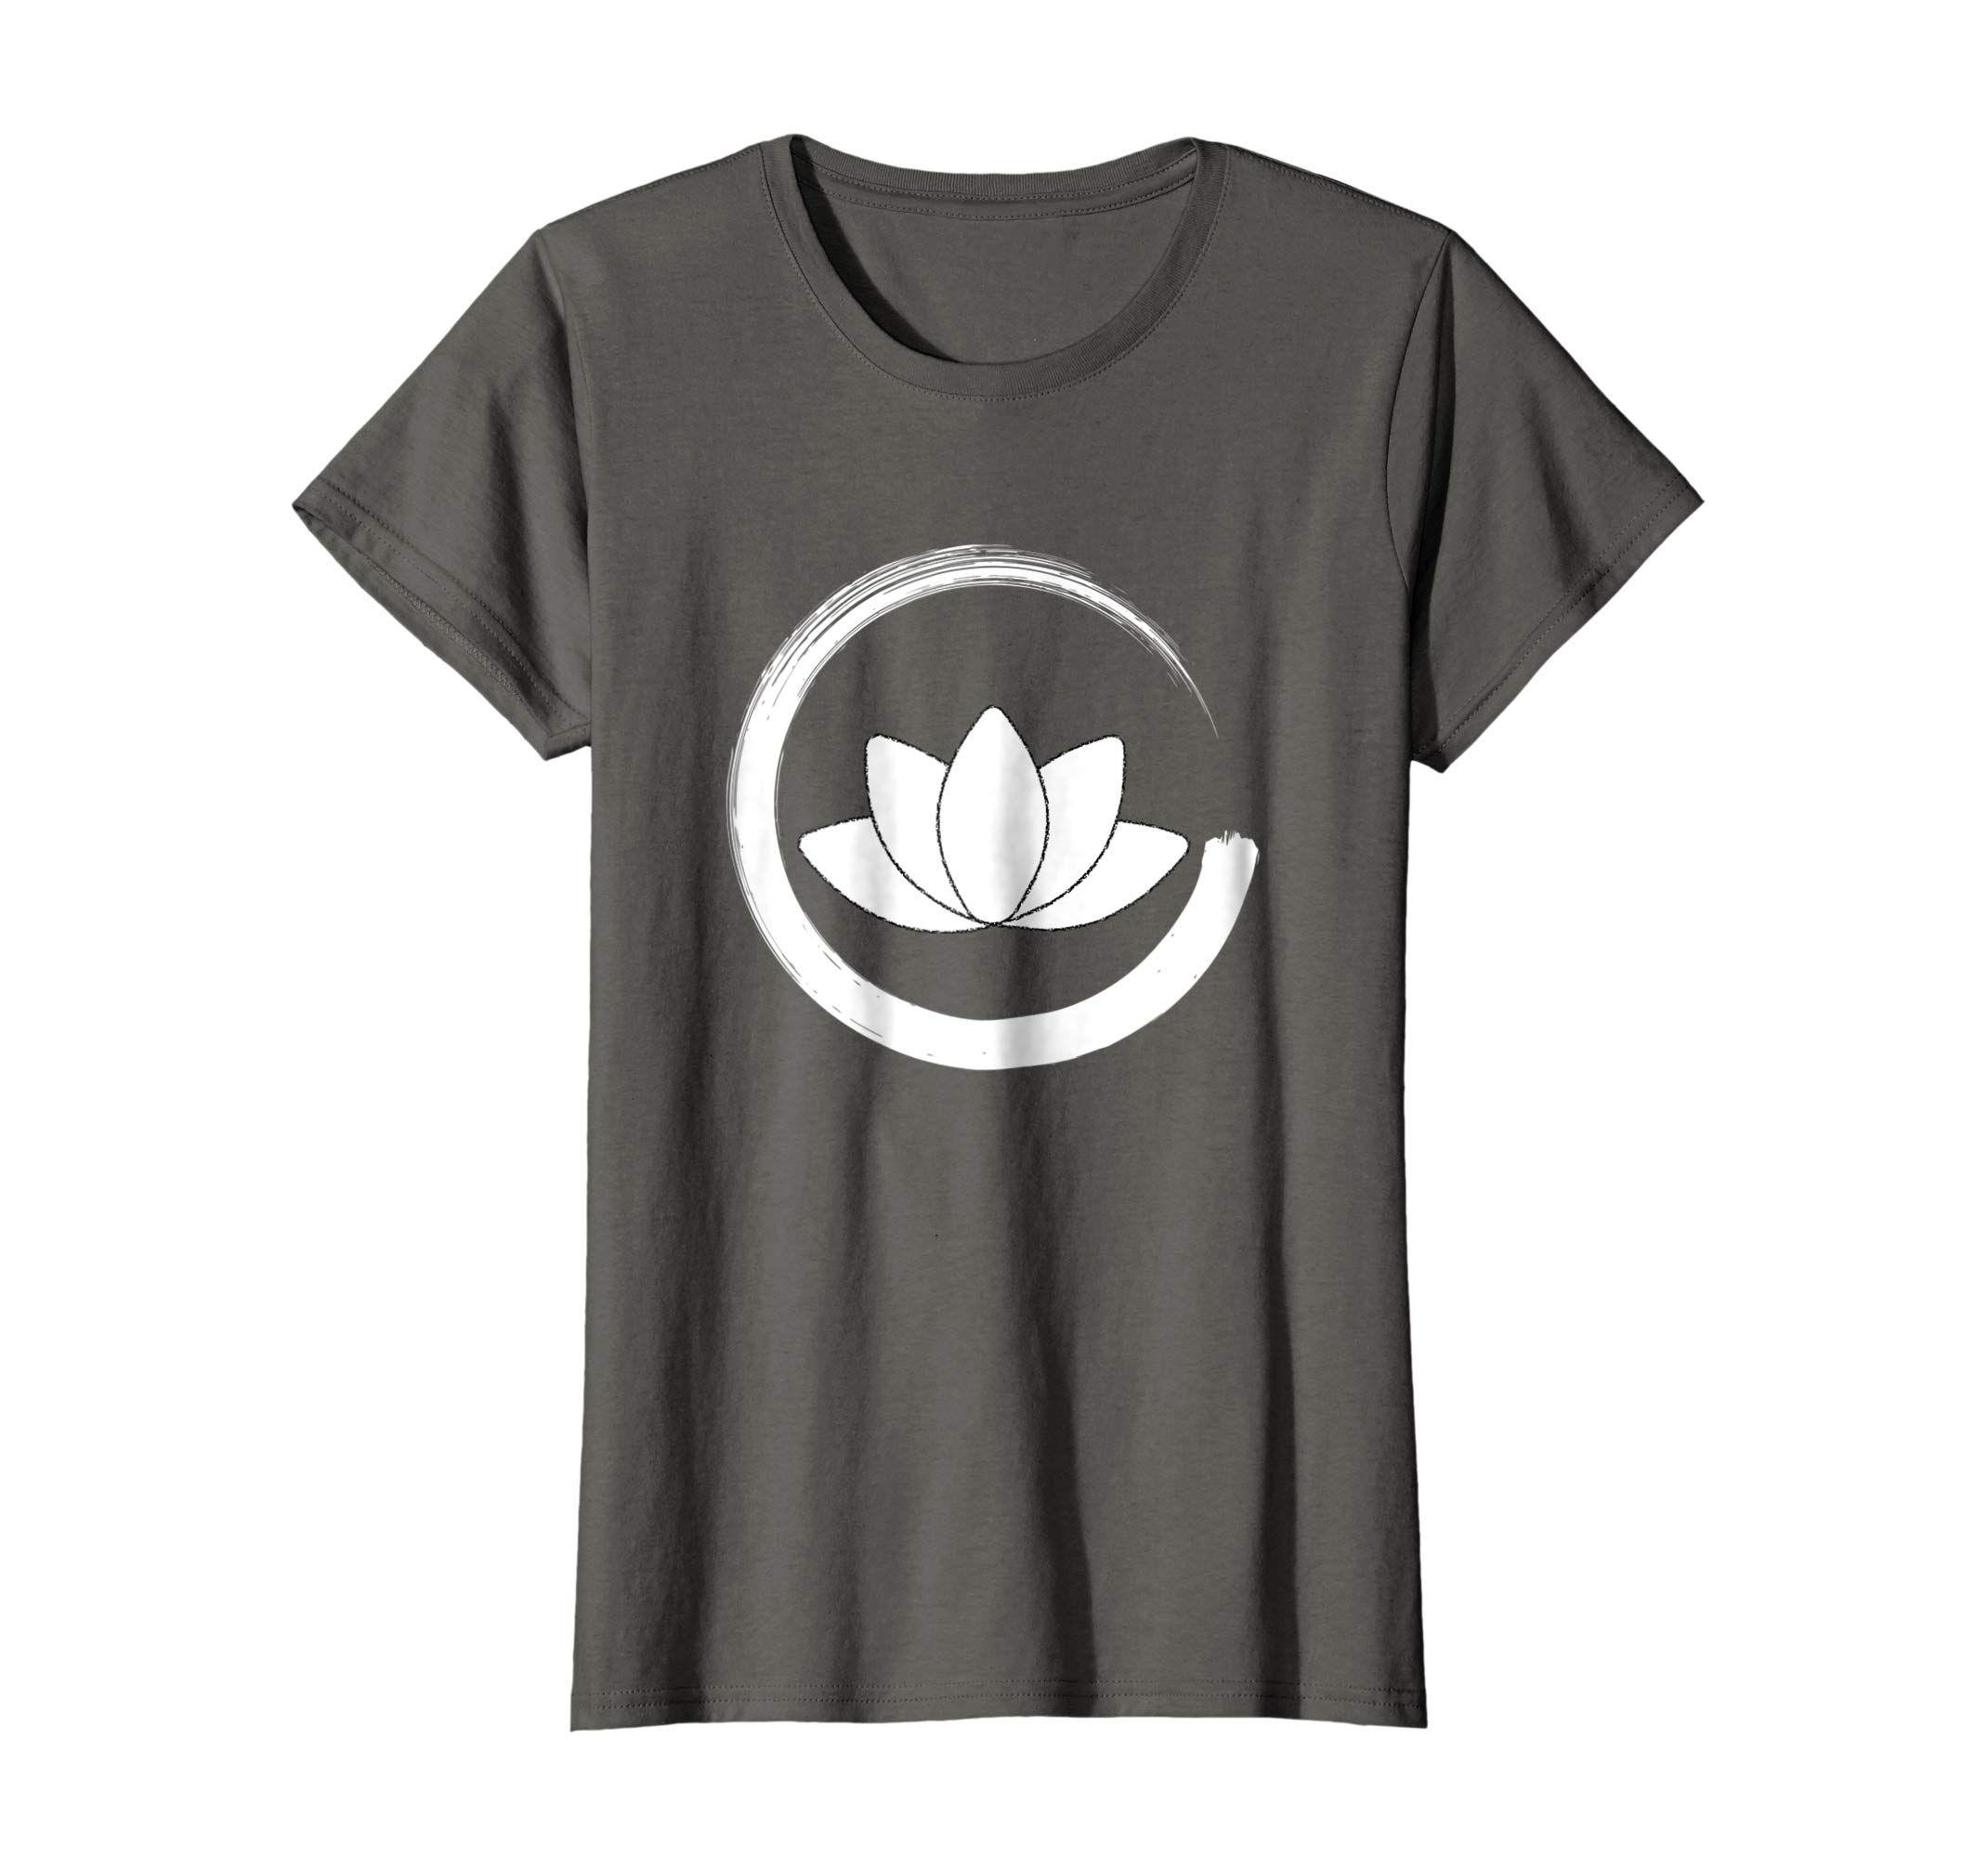 Zen Buddhist Logo - Lotus Symbol Shirt Buddhist Enso Circle: Clothing